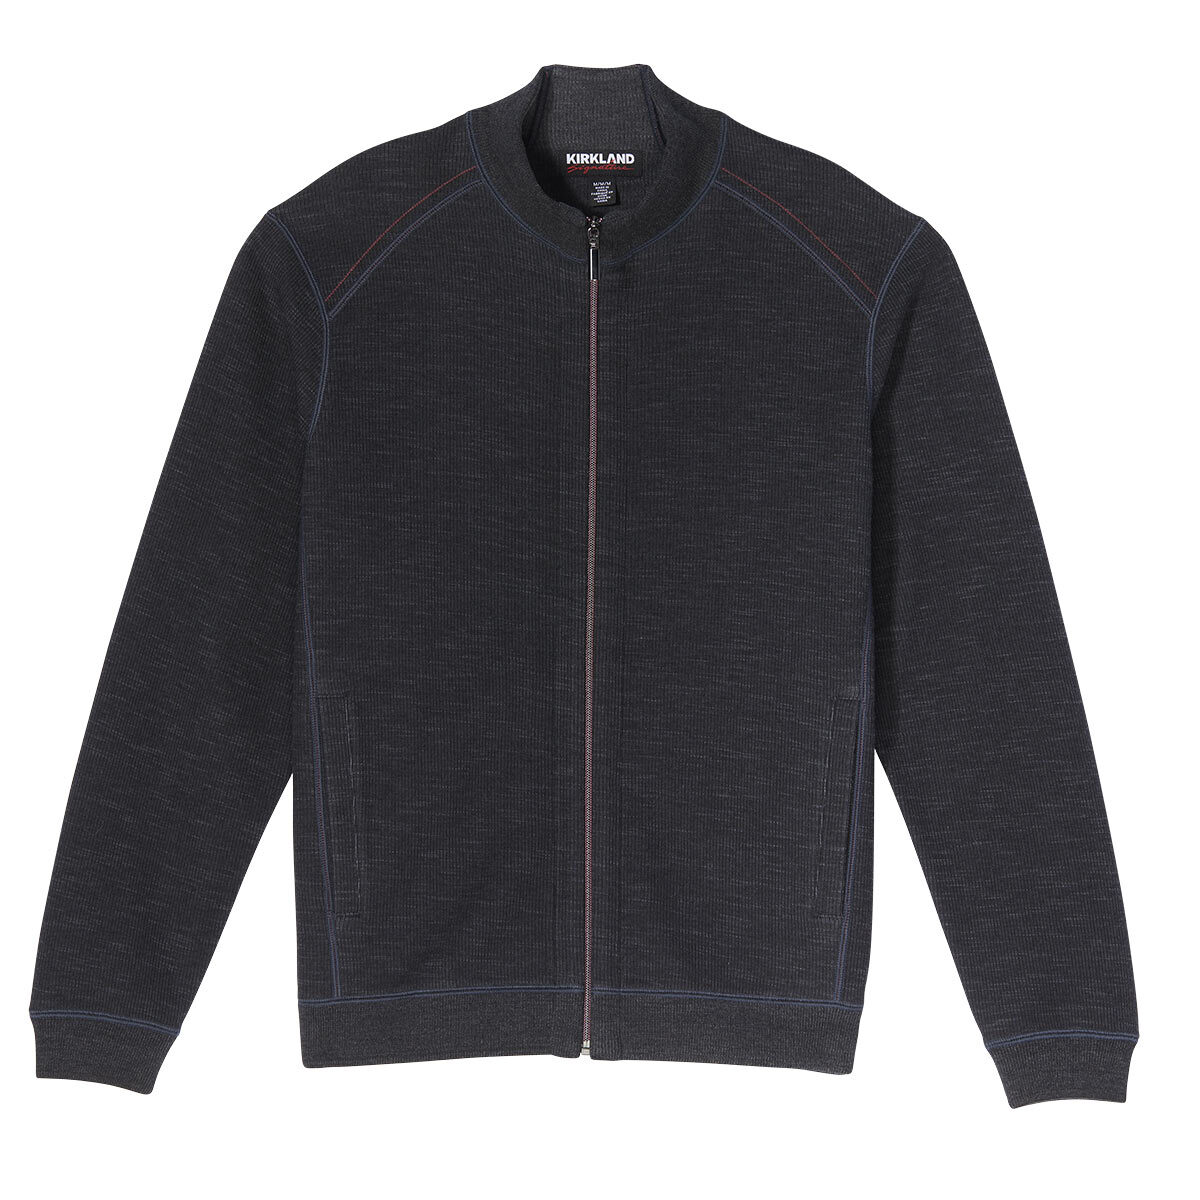 Kirkland Signature Men's Full Zip Sweater in Charcoal, Me...